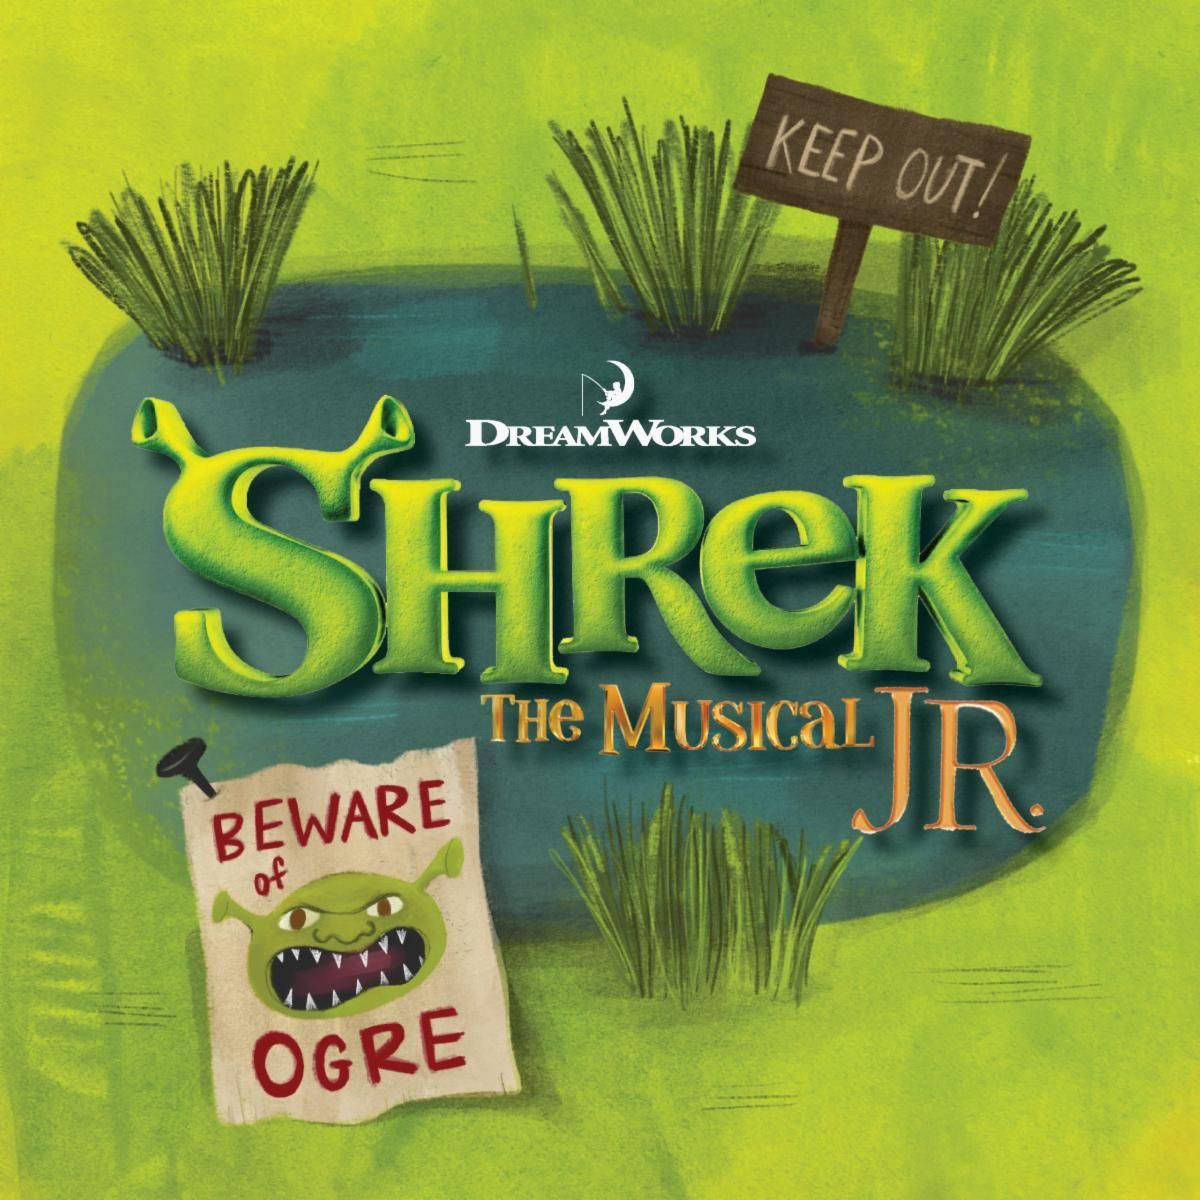 a poster for shrek the musical jr. by dreamworks